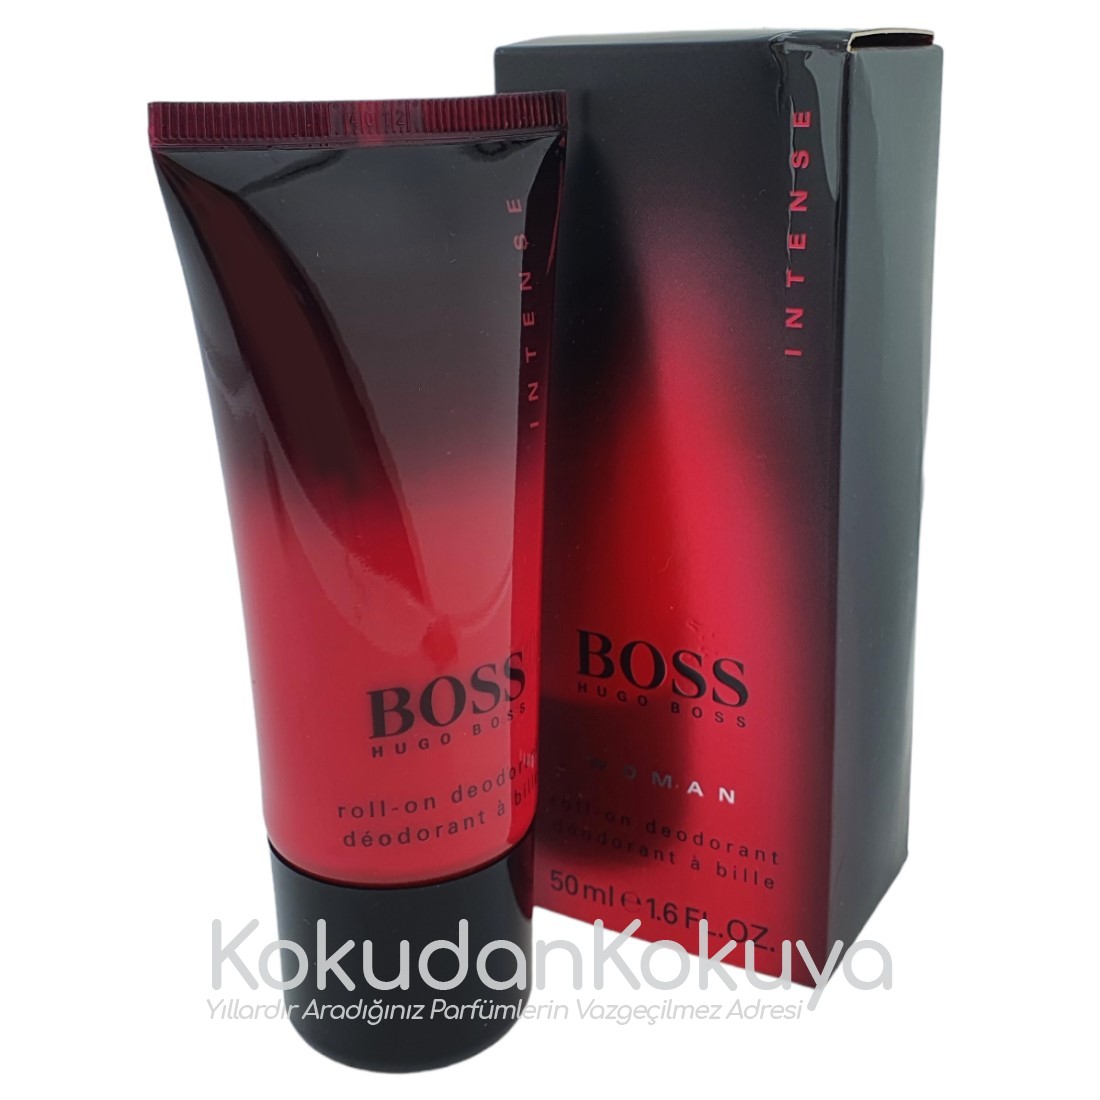 HUGO BOSS Boss Intense (Vintage) Deodorant Kadın 50ml Deodorant Roll-on 